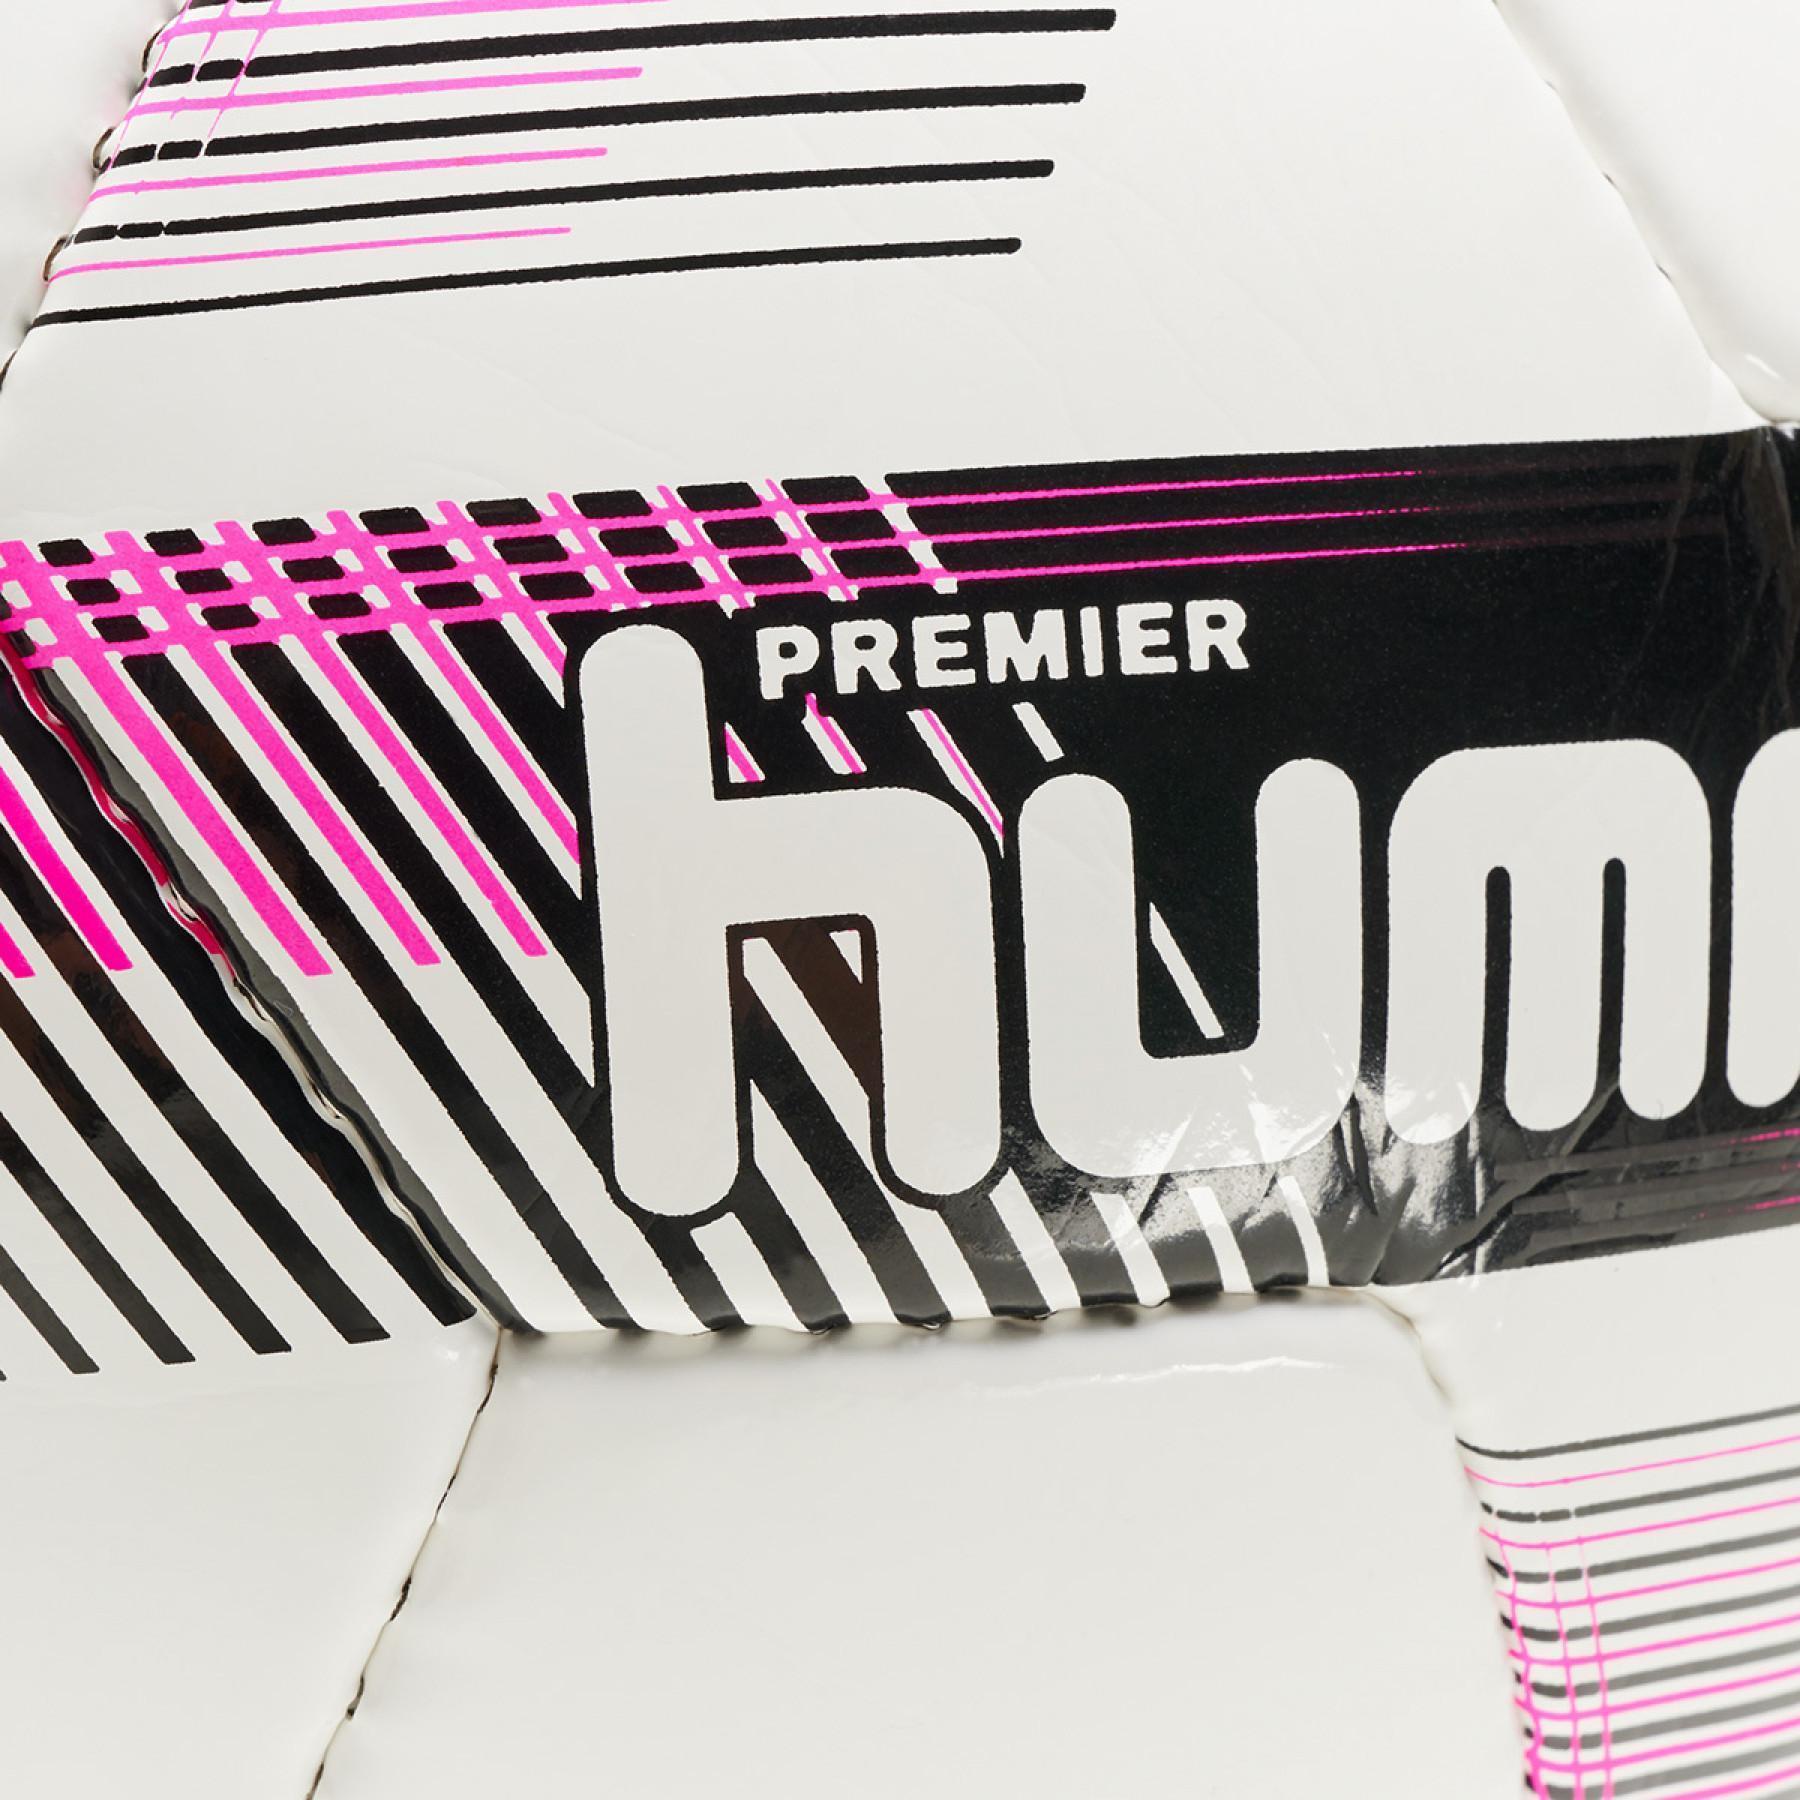 Ballon Hummel Premier Football